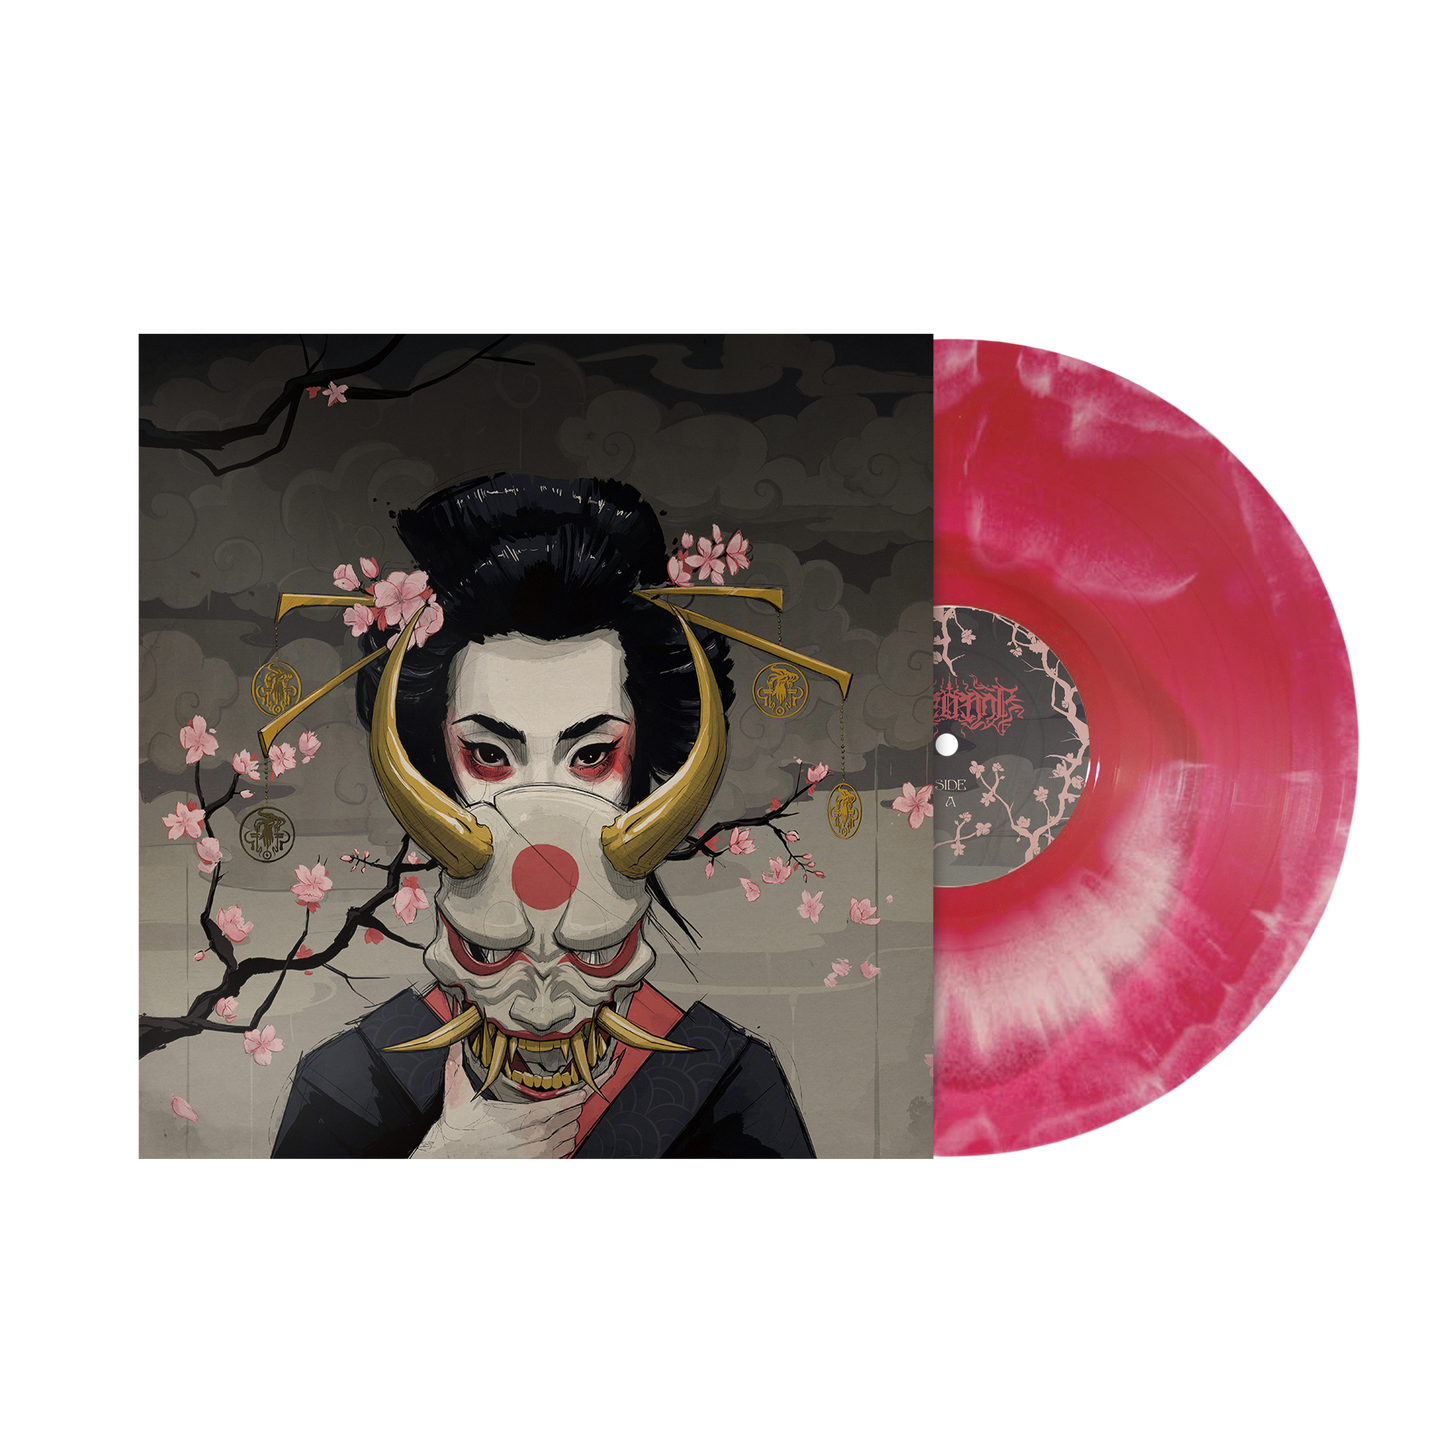 Goddess Reign Vinyl Record - Pink/White A side/B side Swirl /150 [PRE-ORDER]